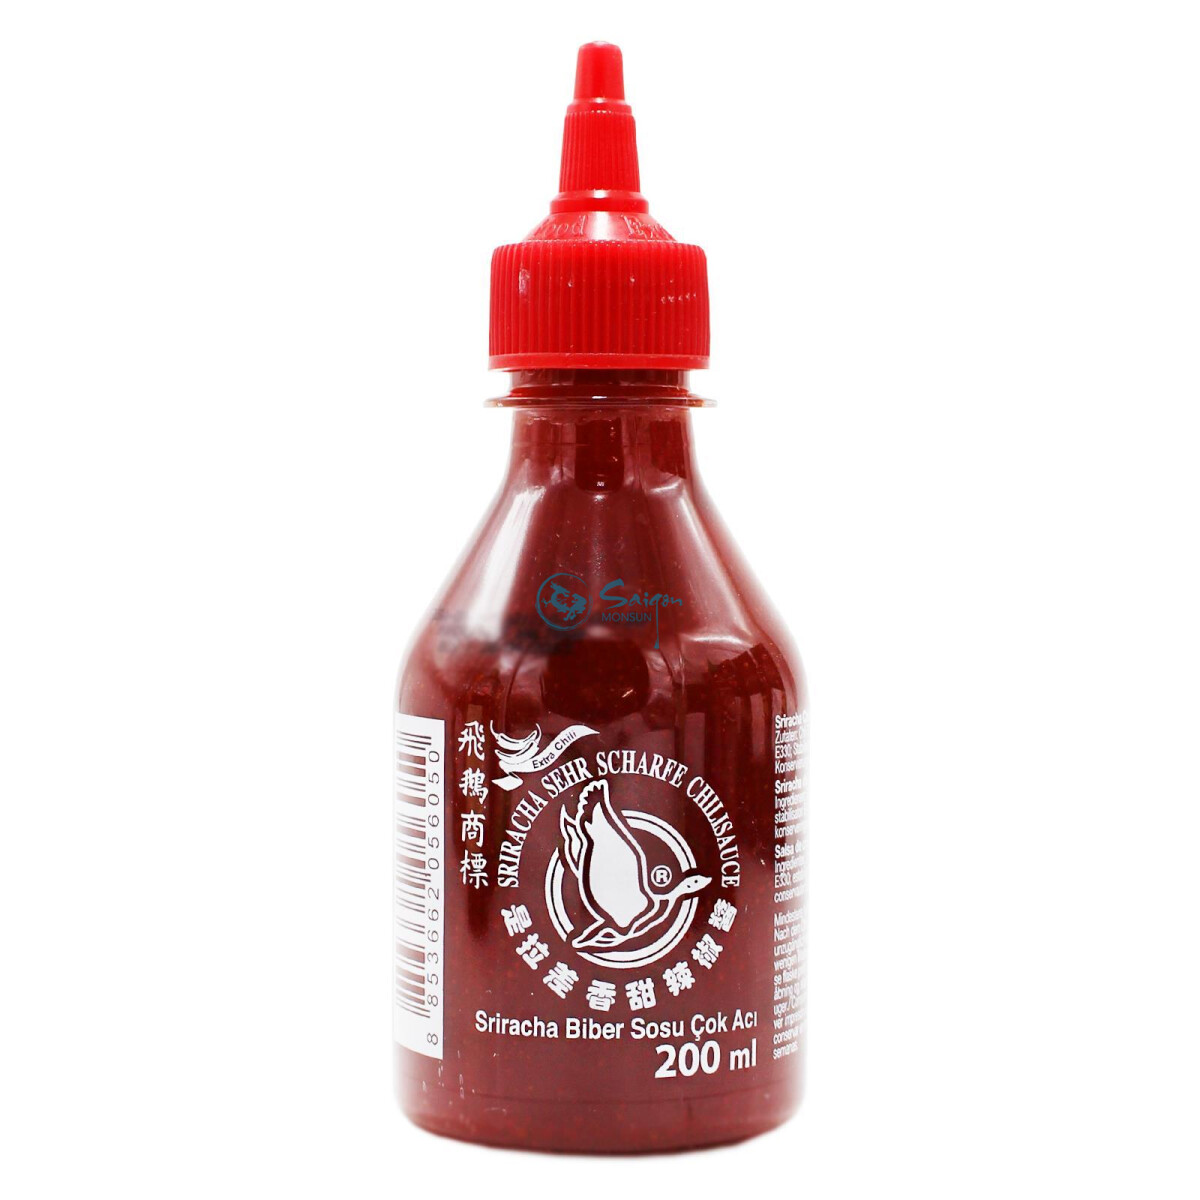 Flying Goose Sriracha Chilisauce sehr scharf 200ml, 2,69